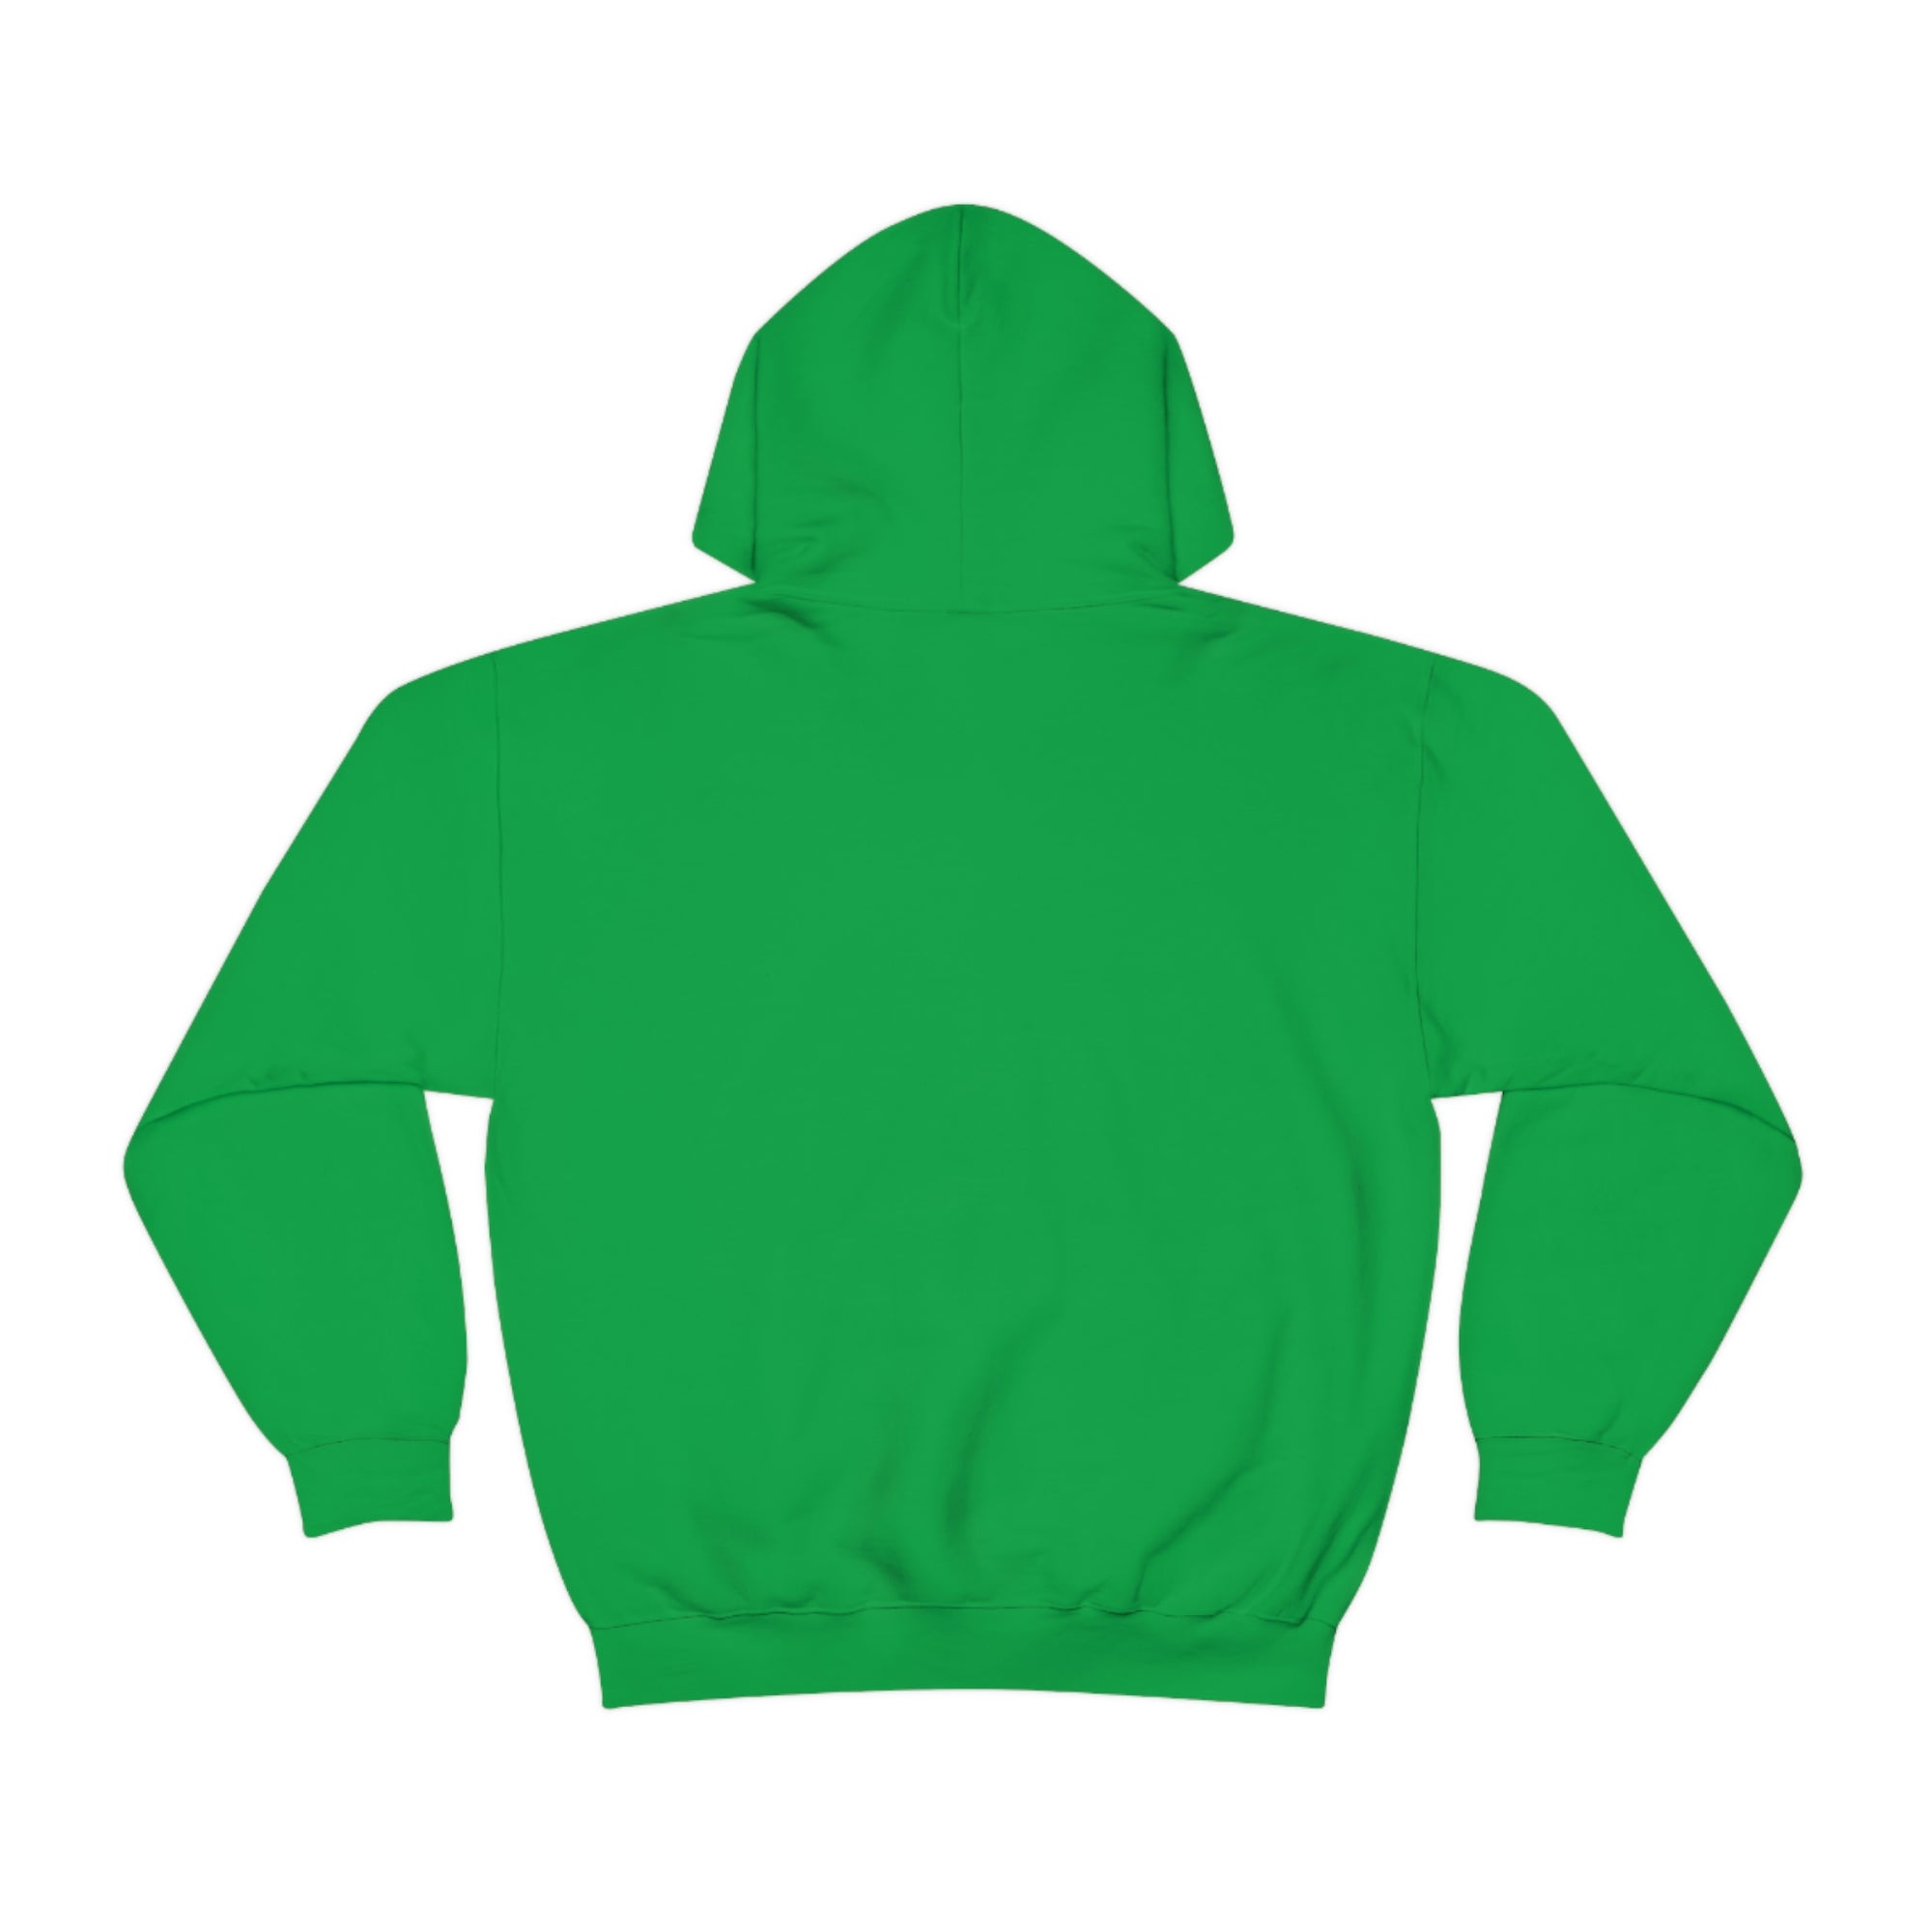  Back of the green Borg hooded sweatshirt